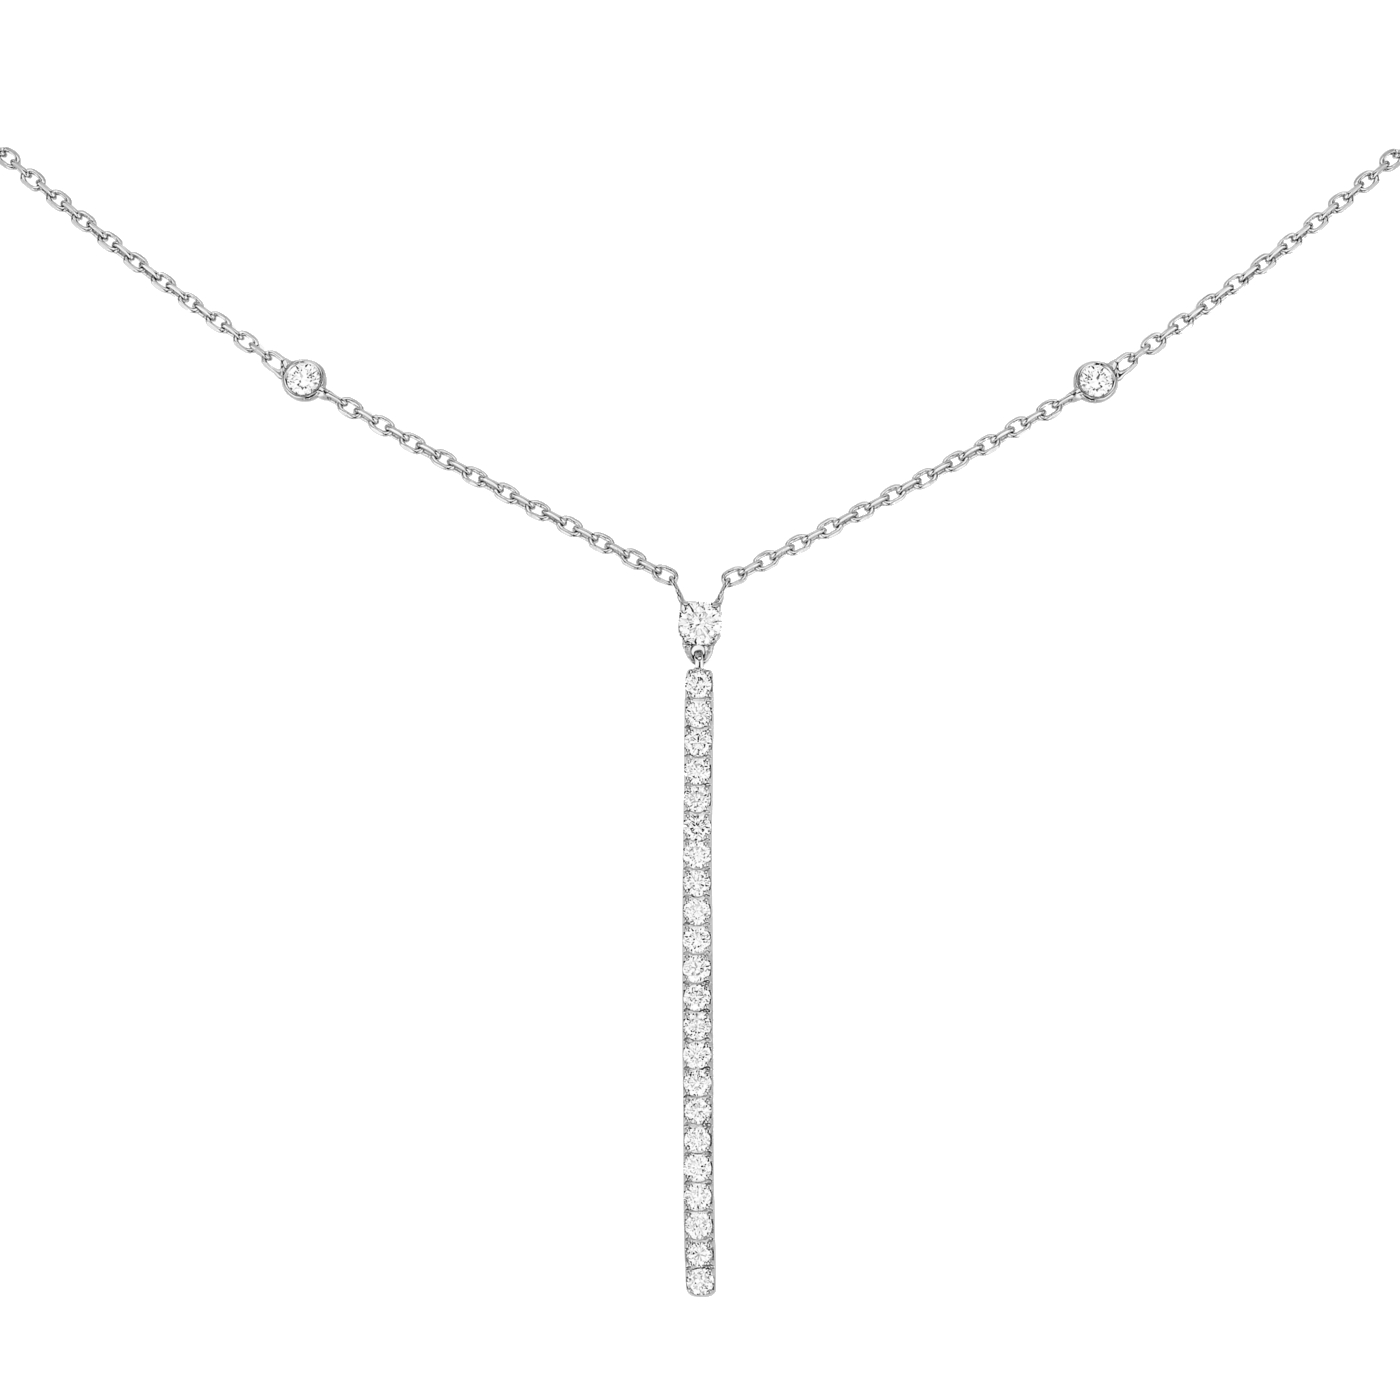 Gatsby Vertical Bar White Gold Diamond Necklace